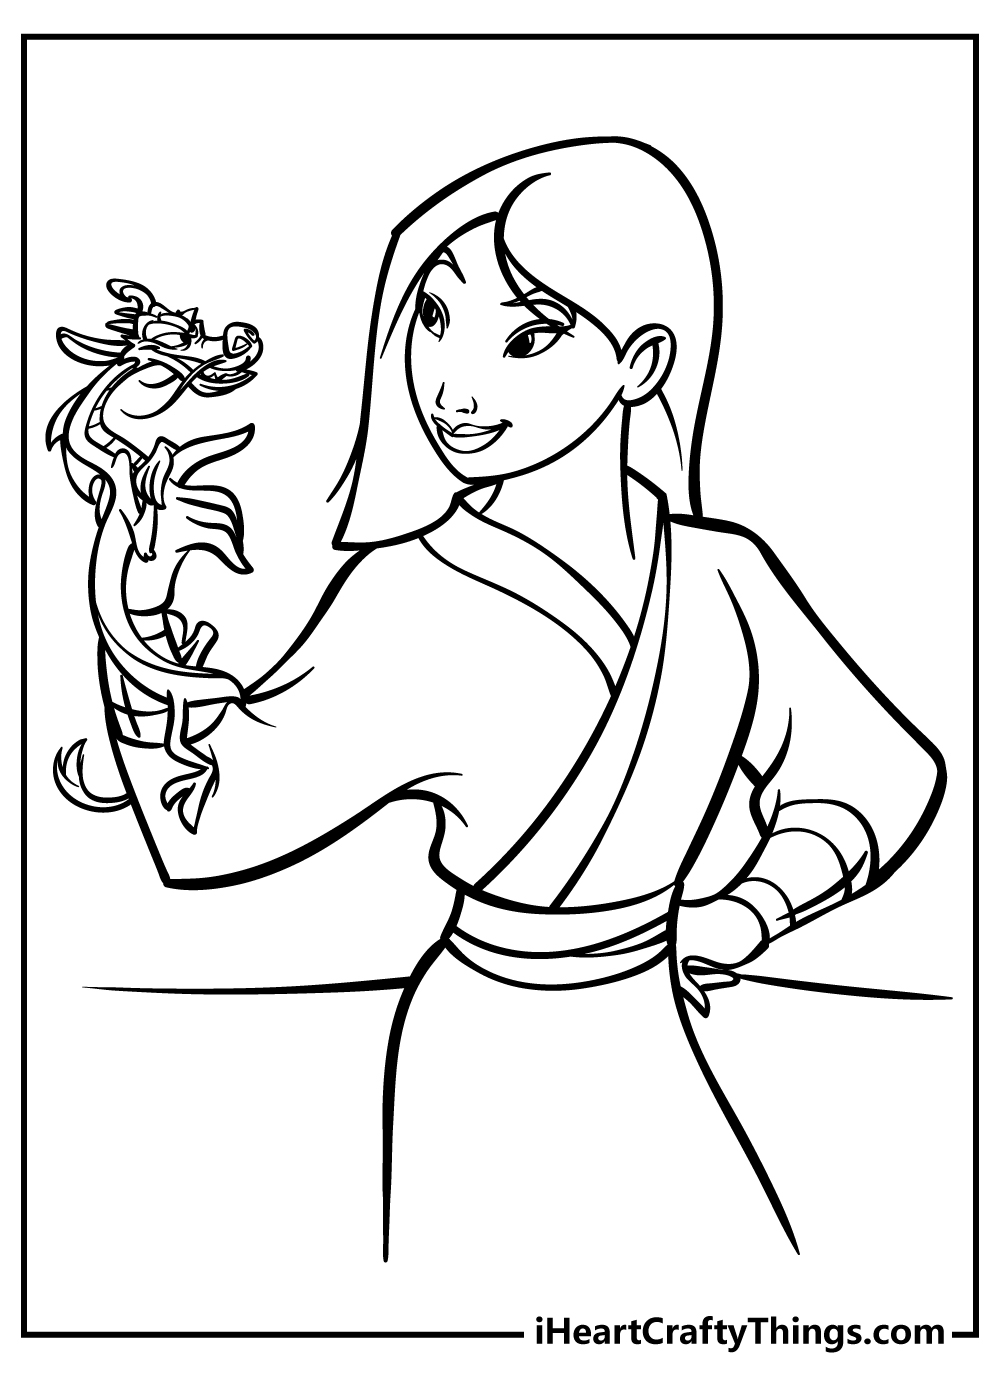 Mulan coloring pages free printables